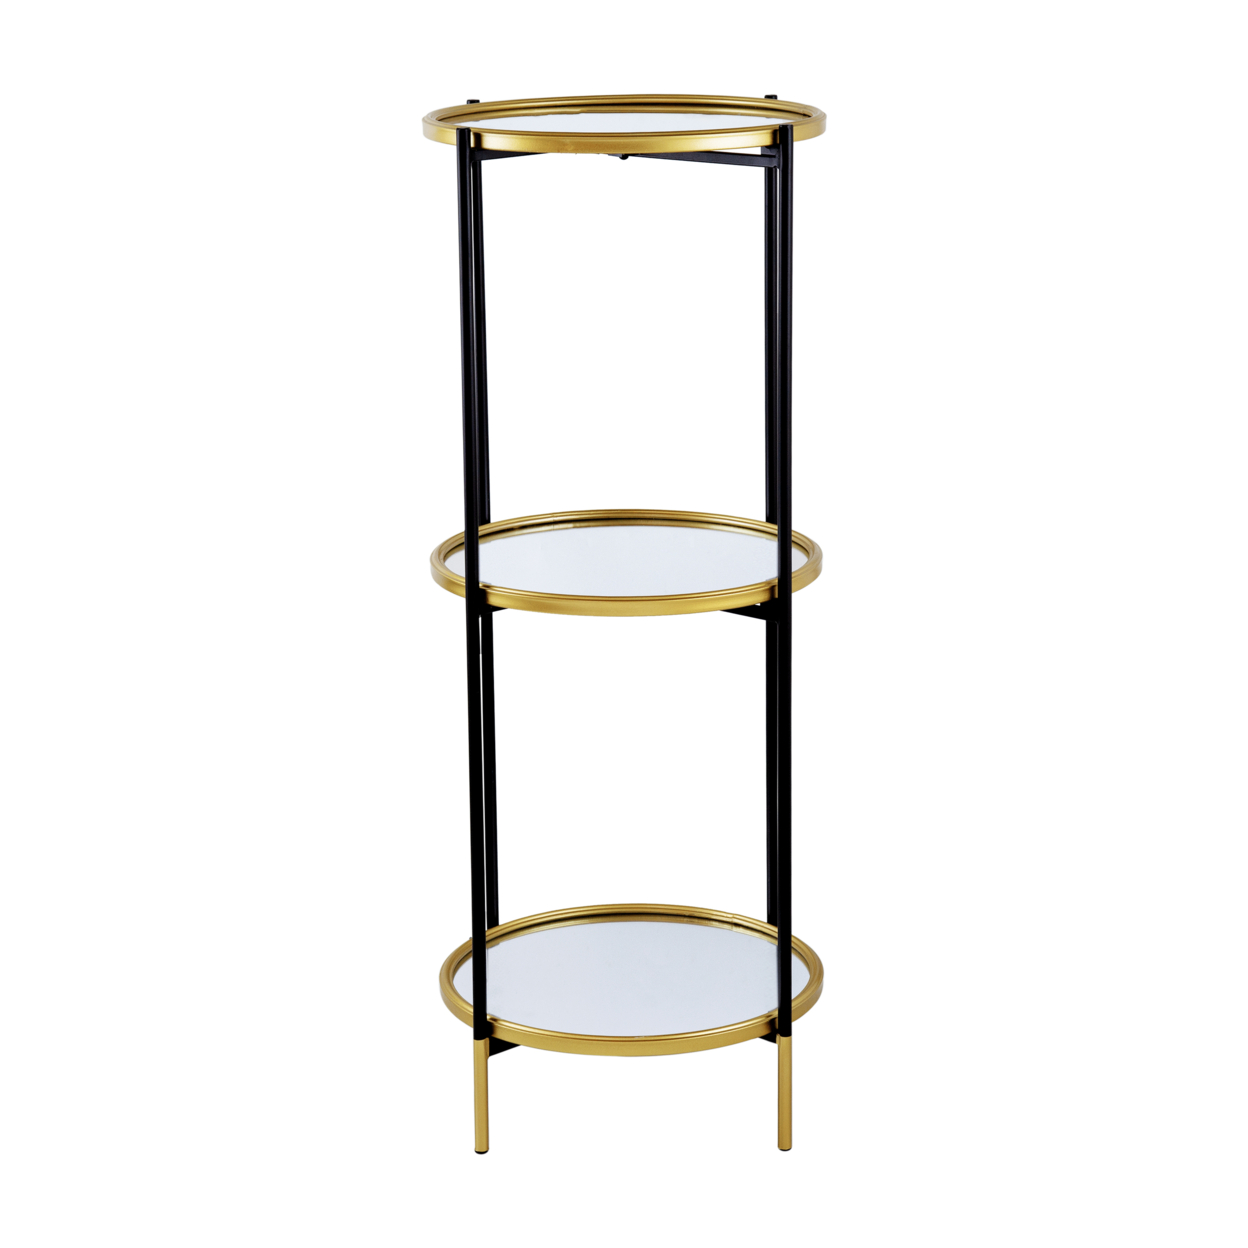 Ara 39 Inch Round 3 Tier Shelf, Metal, Mirrored Glass Shelves, Black, Gold- Saltoro Sherpi